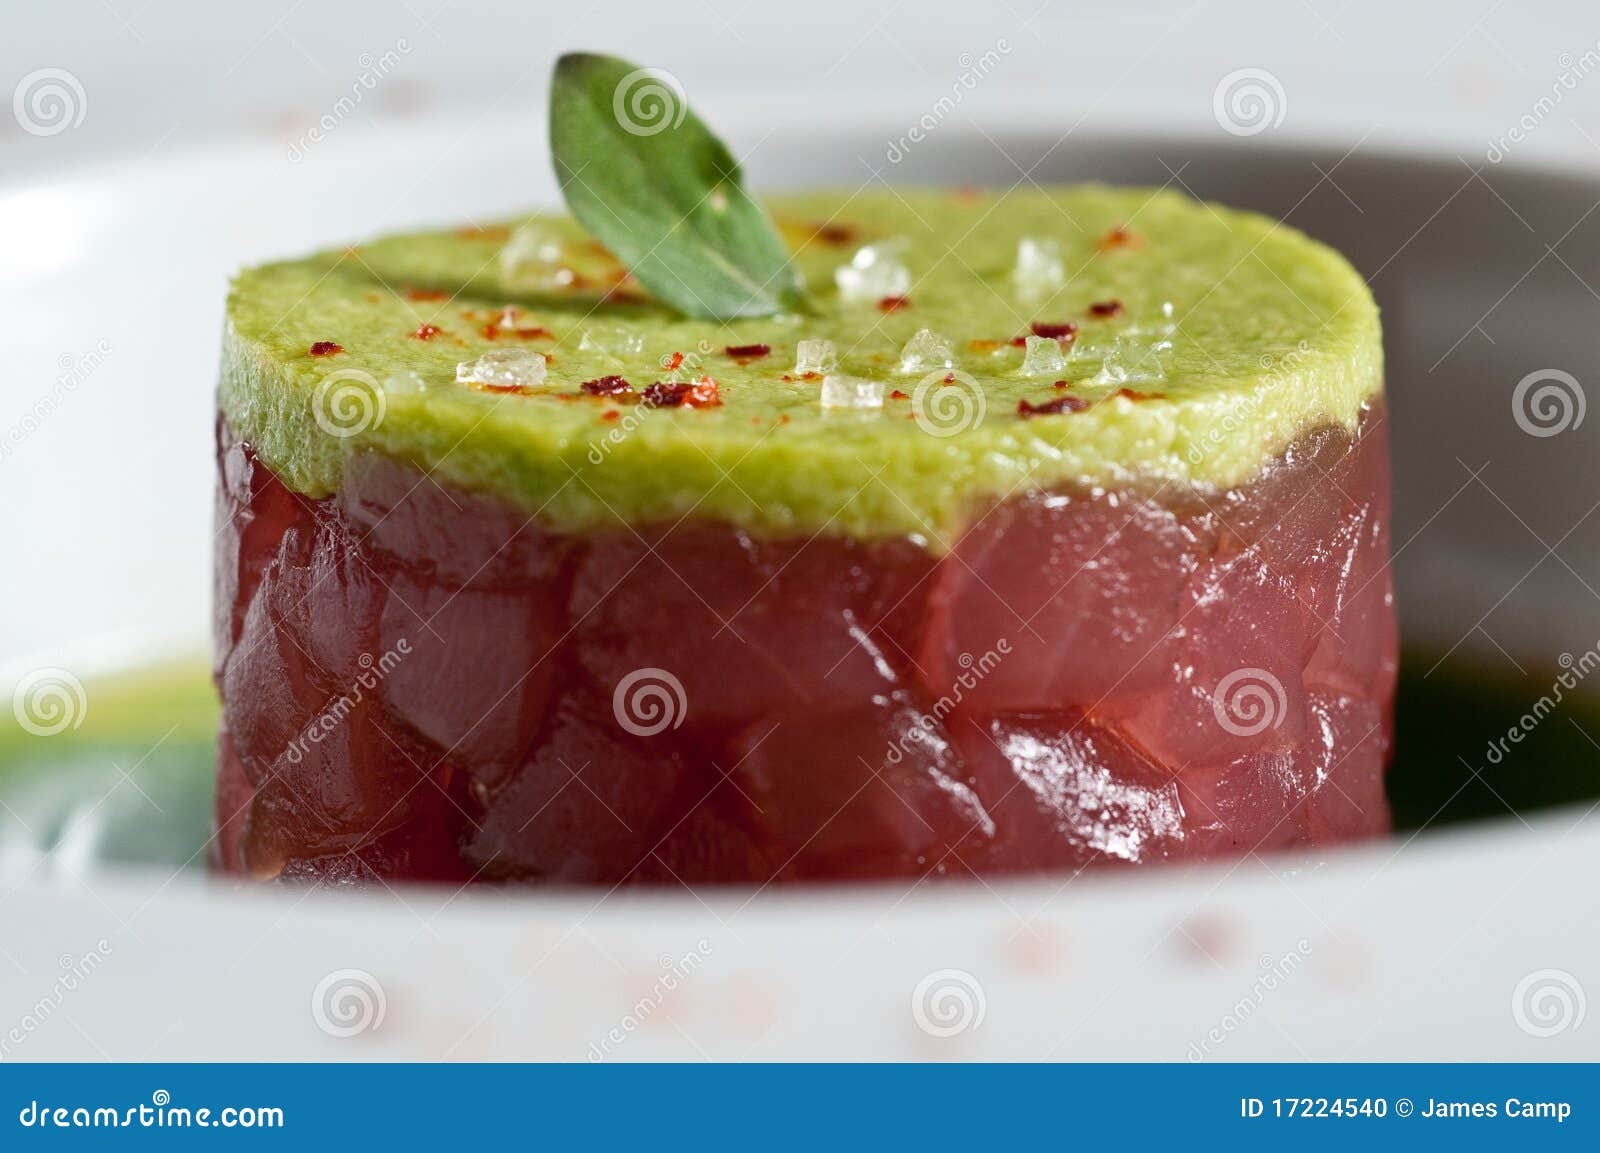 tuna crudo with avocado